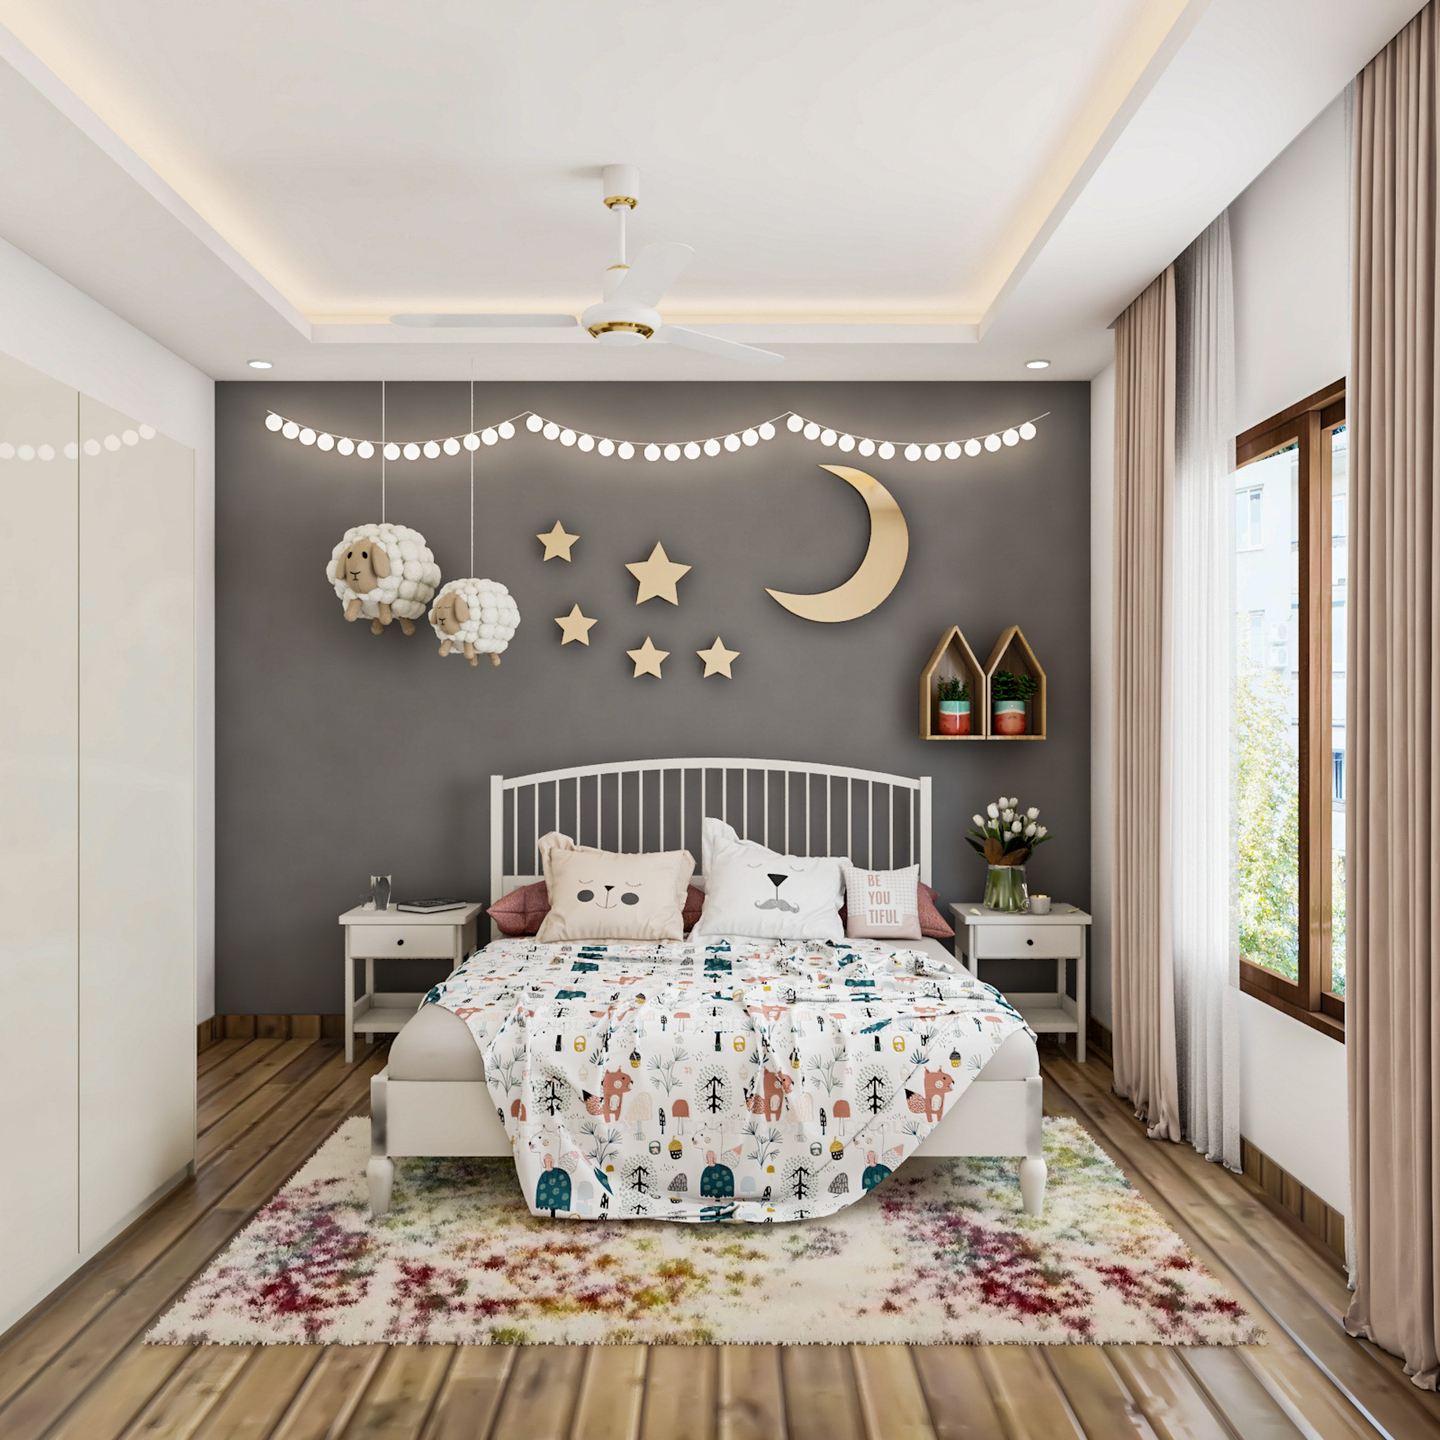 Bedroom False Ceiling Design With Cove Lights - Livspace